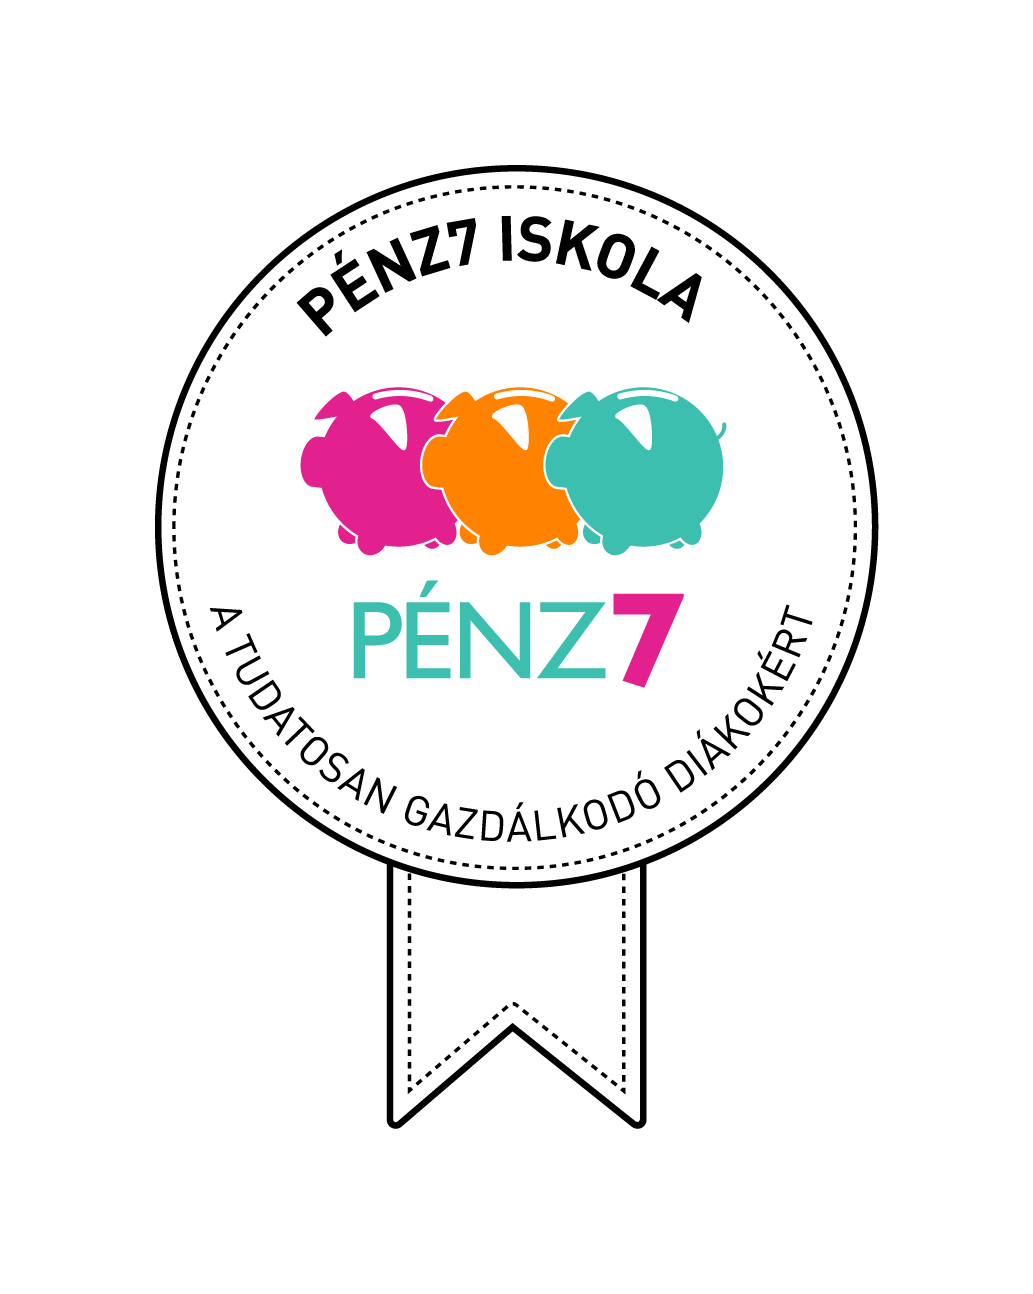 penz7 logo